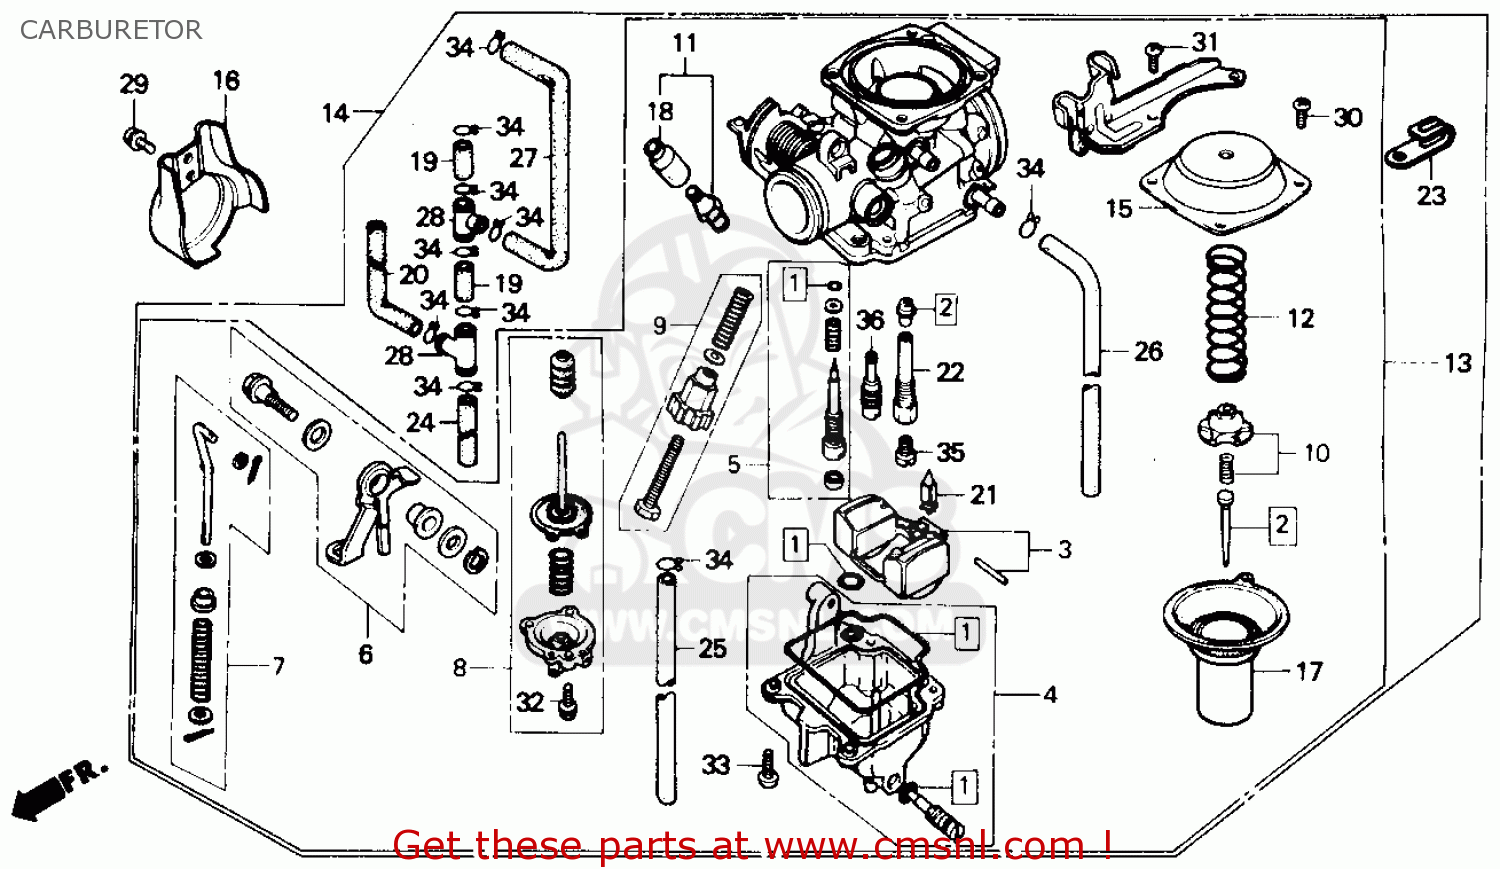 Honda rebel carburetor schematic #4